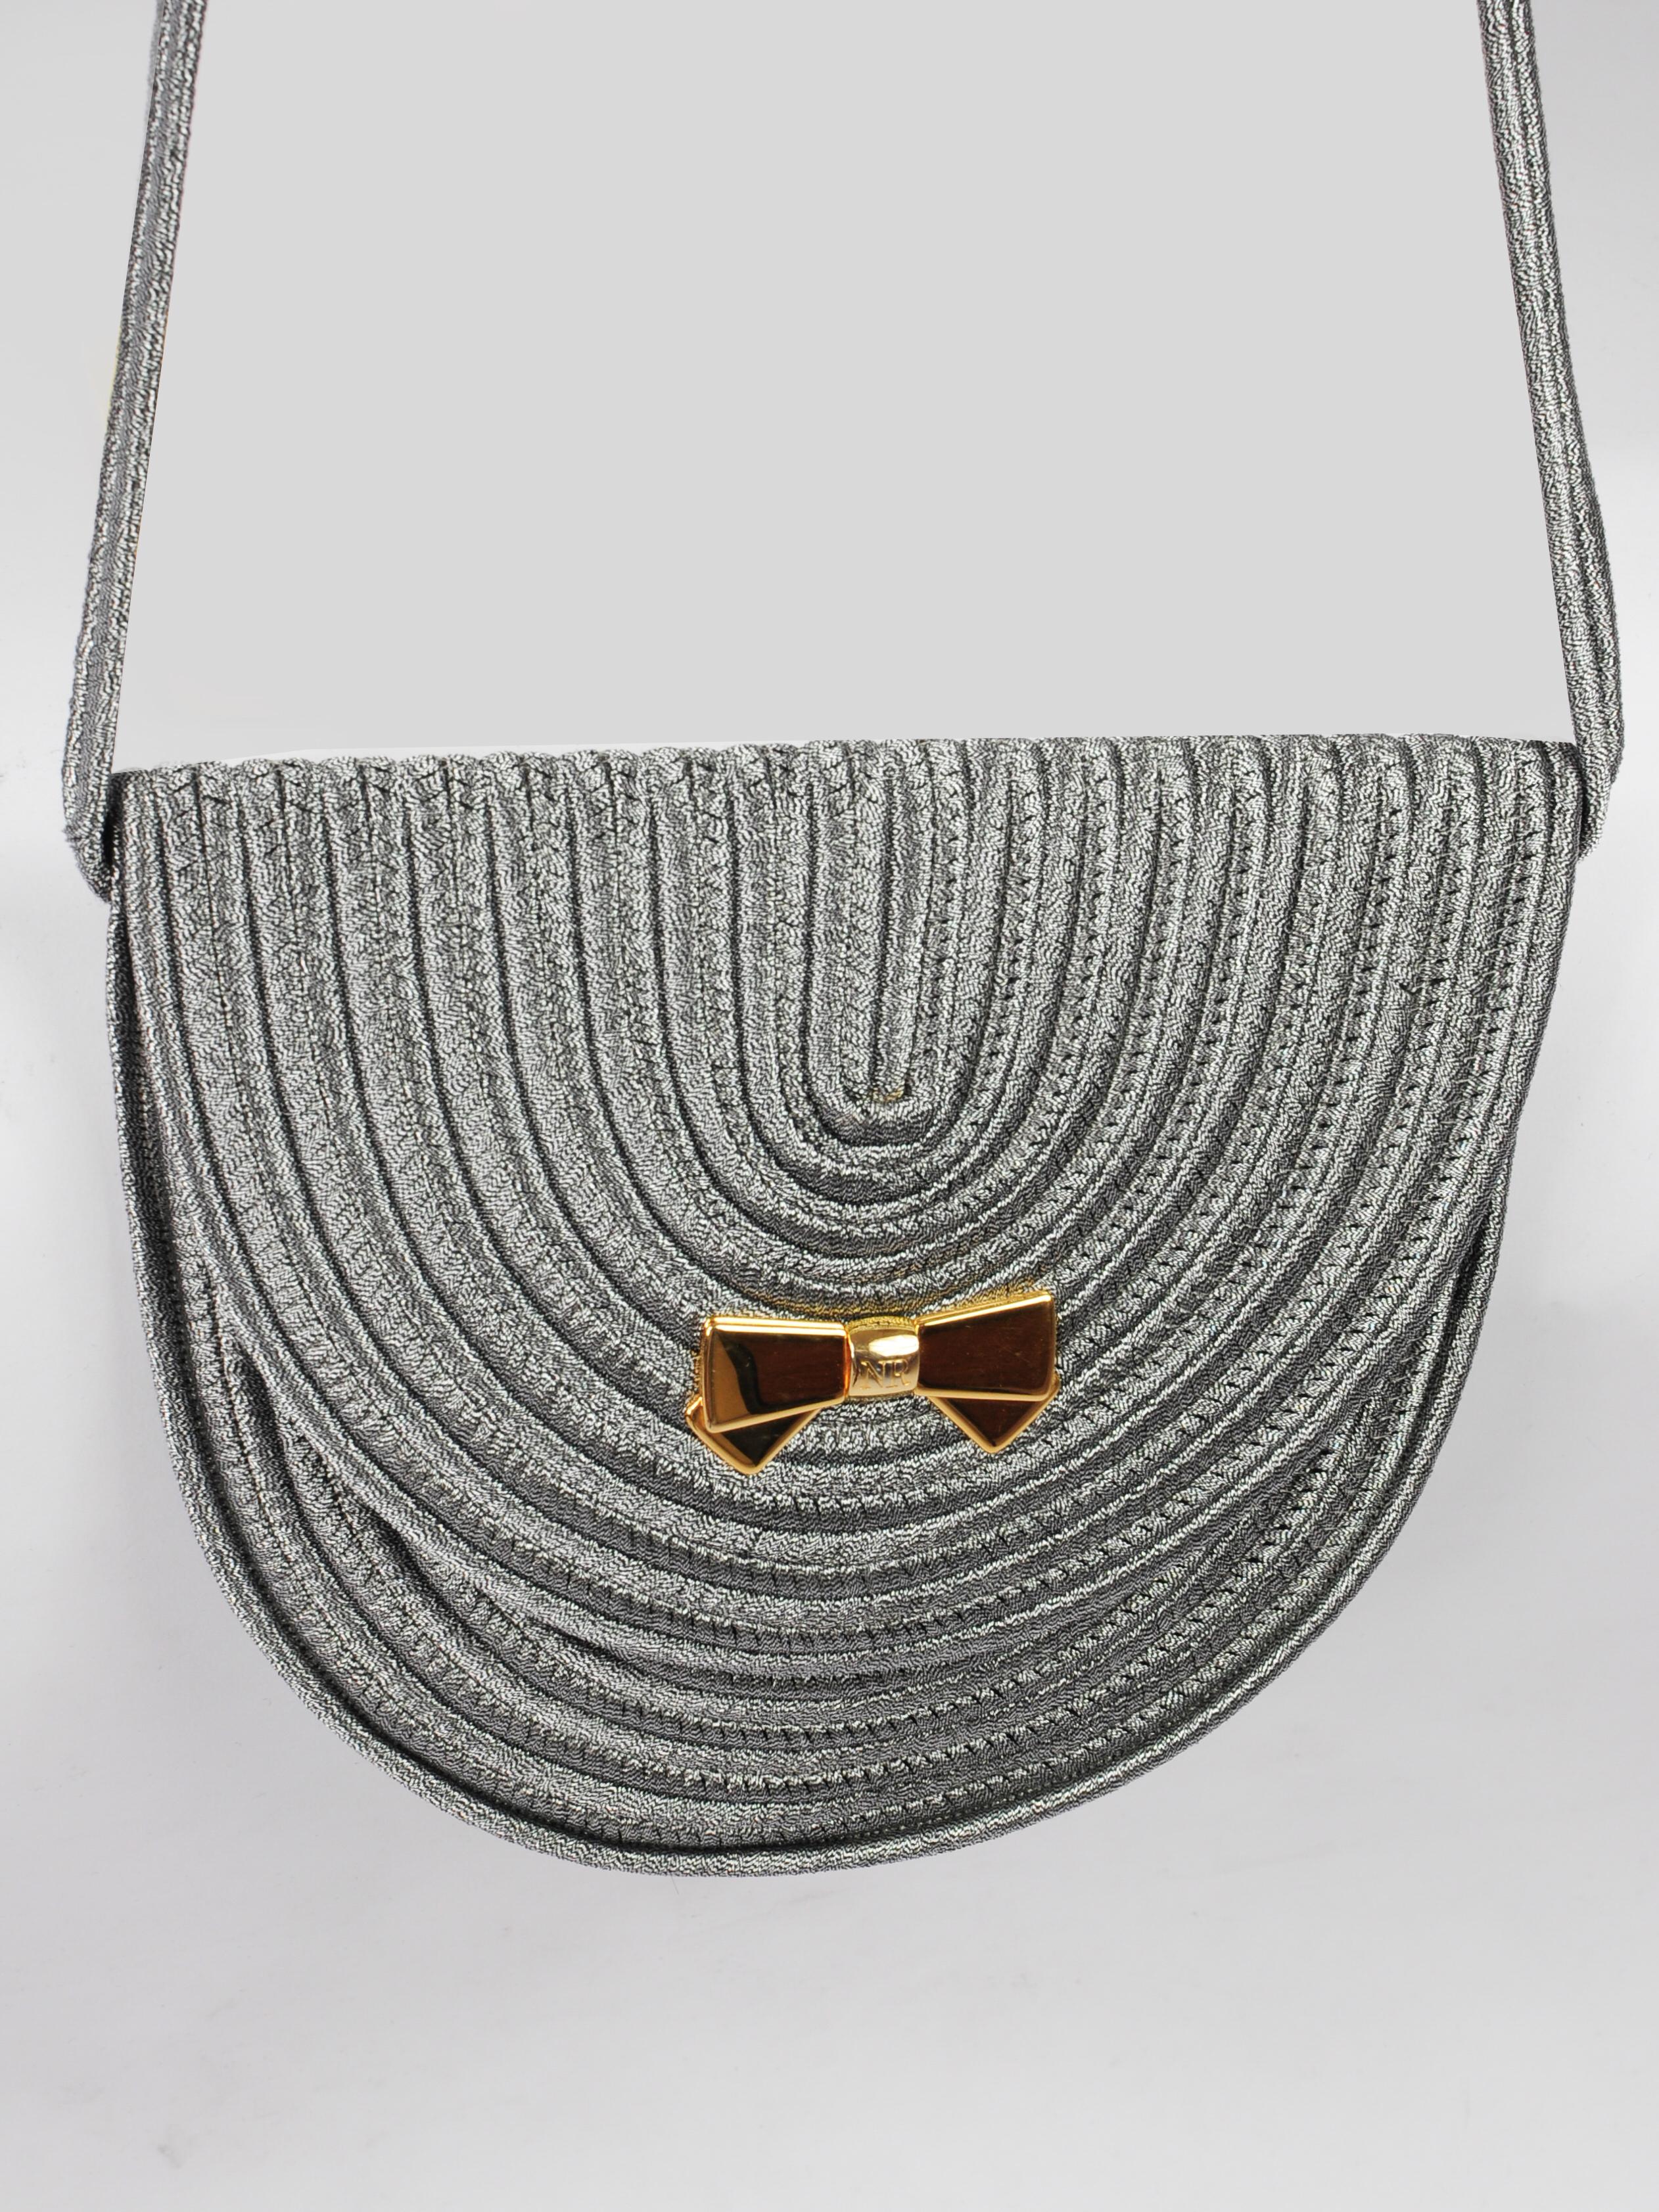 Women's or Men's Nina Ricci Passementerie Silver Crossbody Evening Bag Signature Gold Bow 1980s For Sale